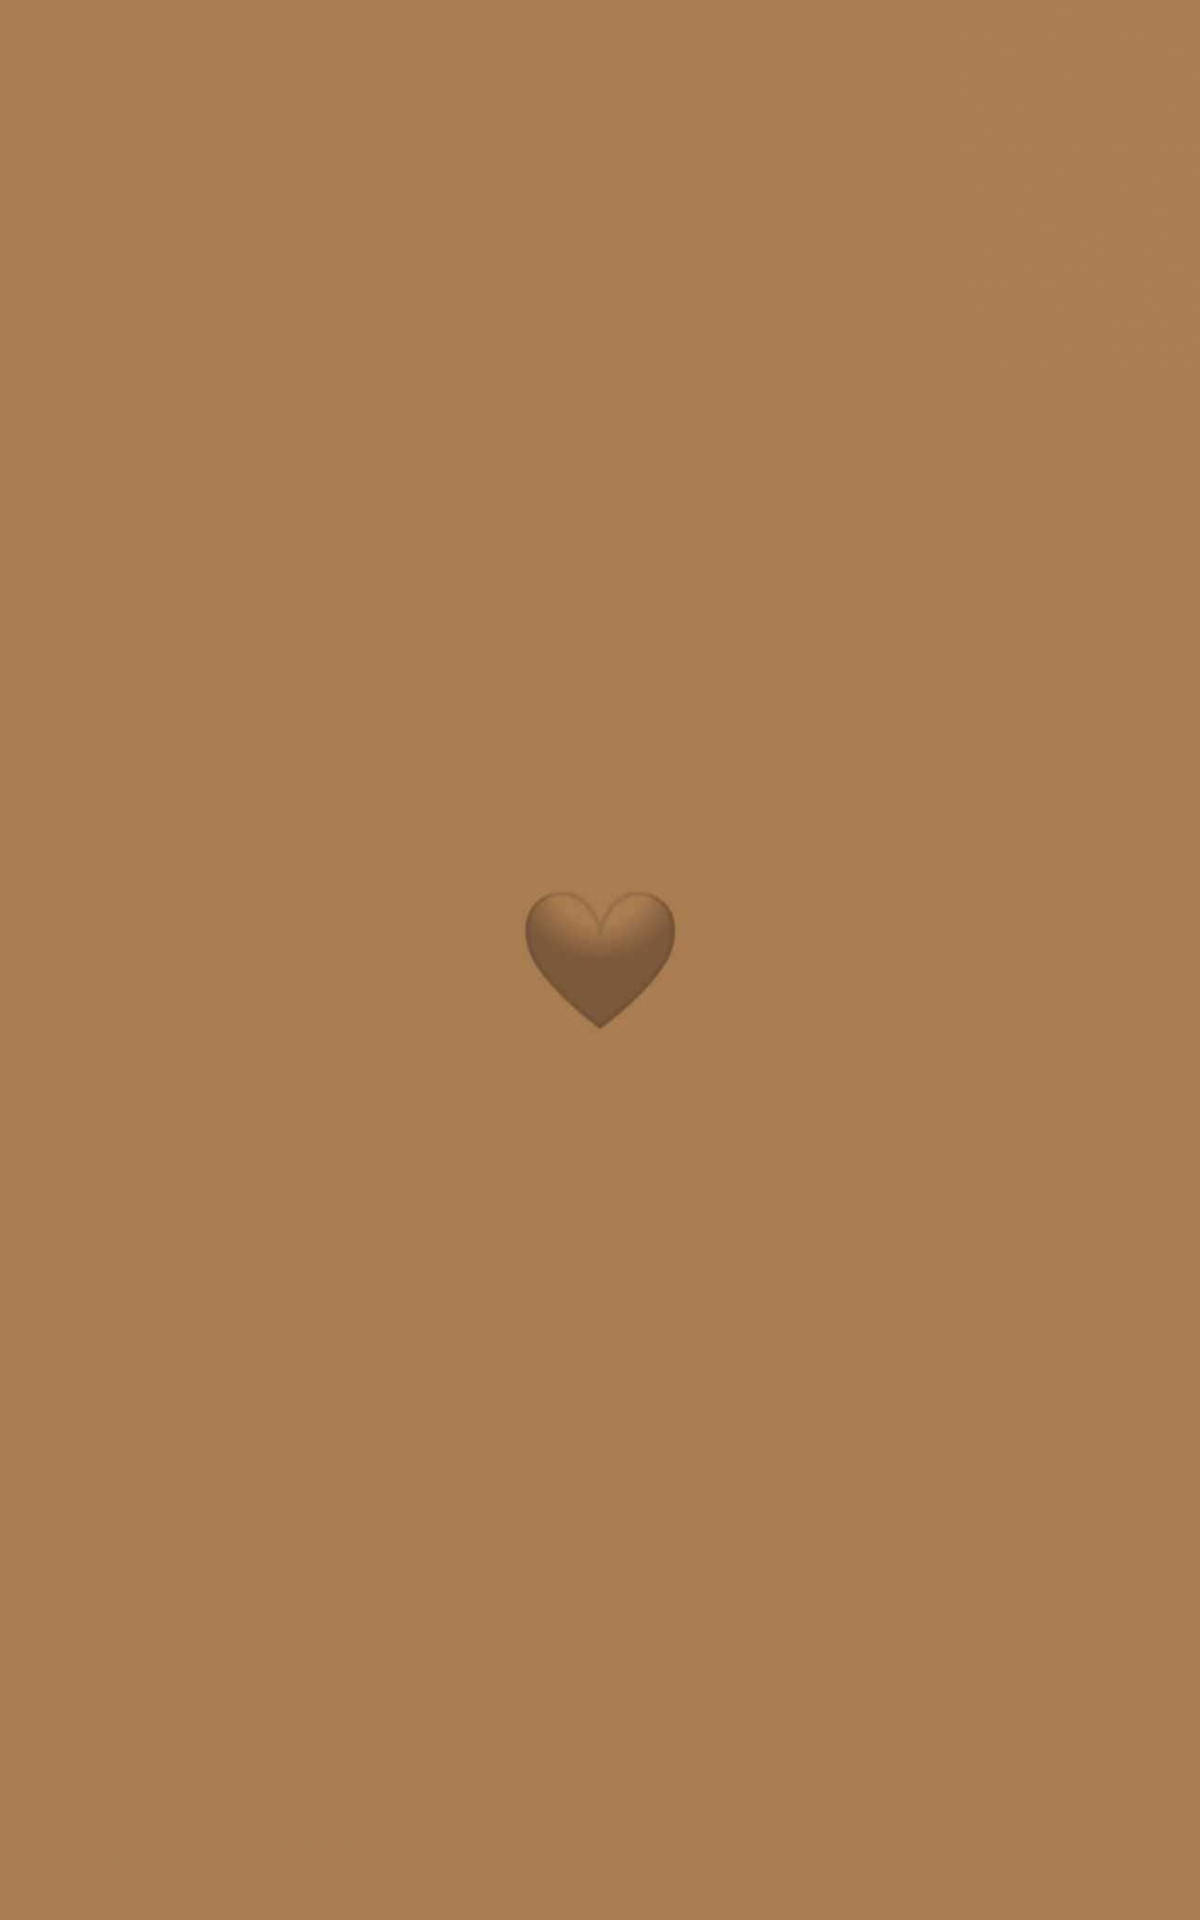 Download Minimalist Light Brown Aesthetic Heart Wallpaper 